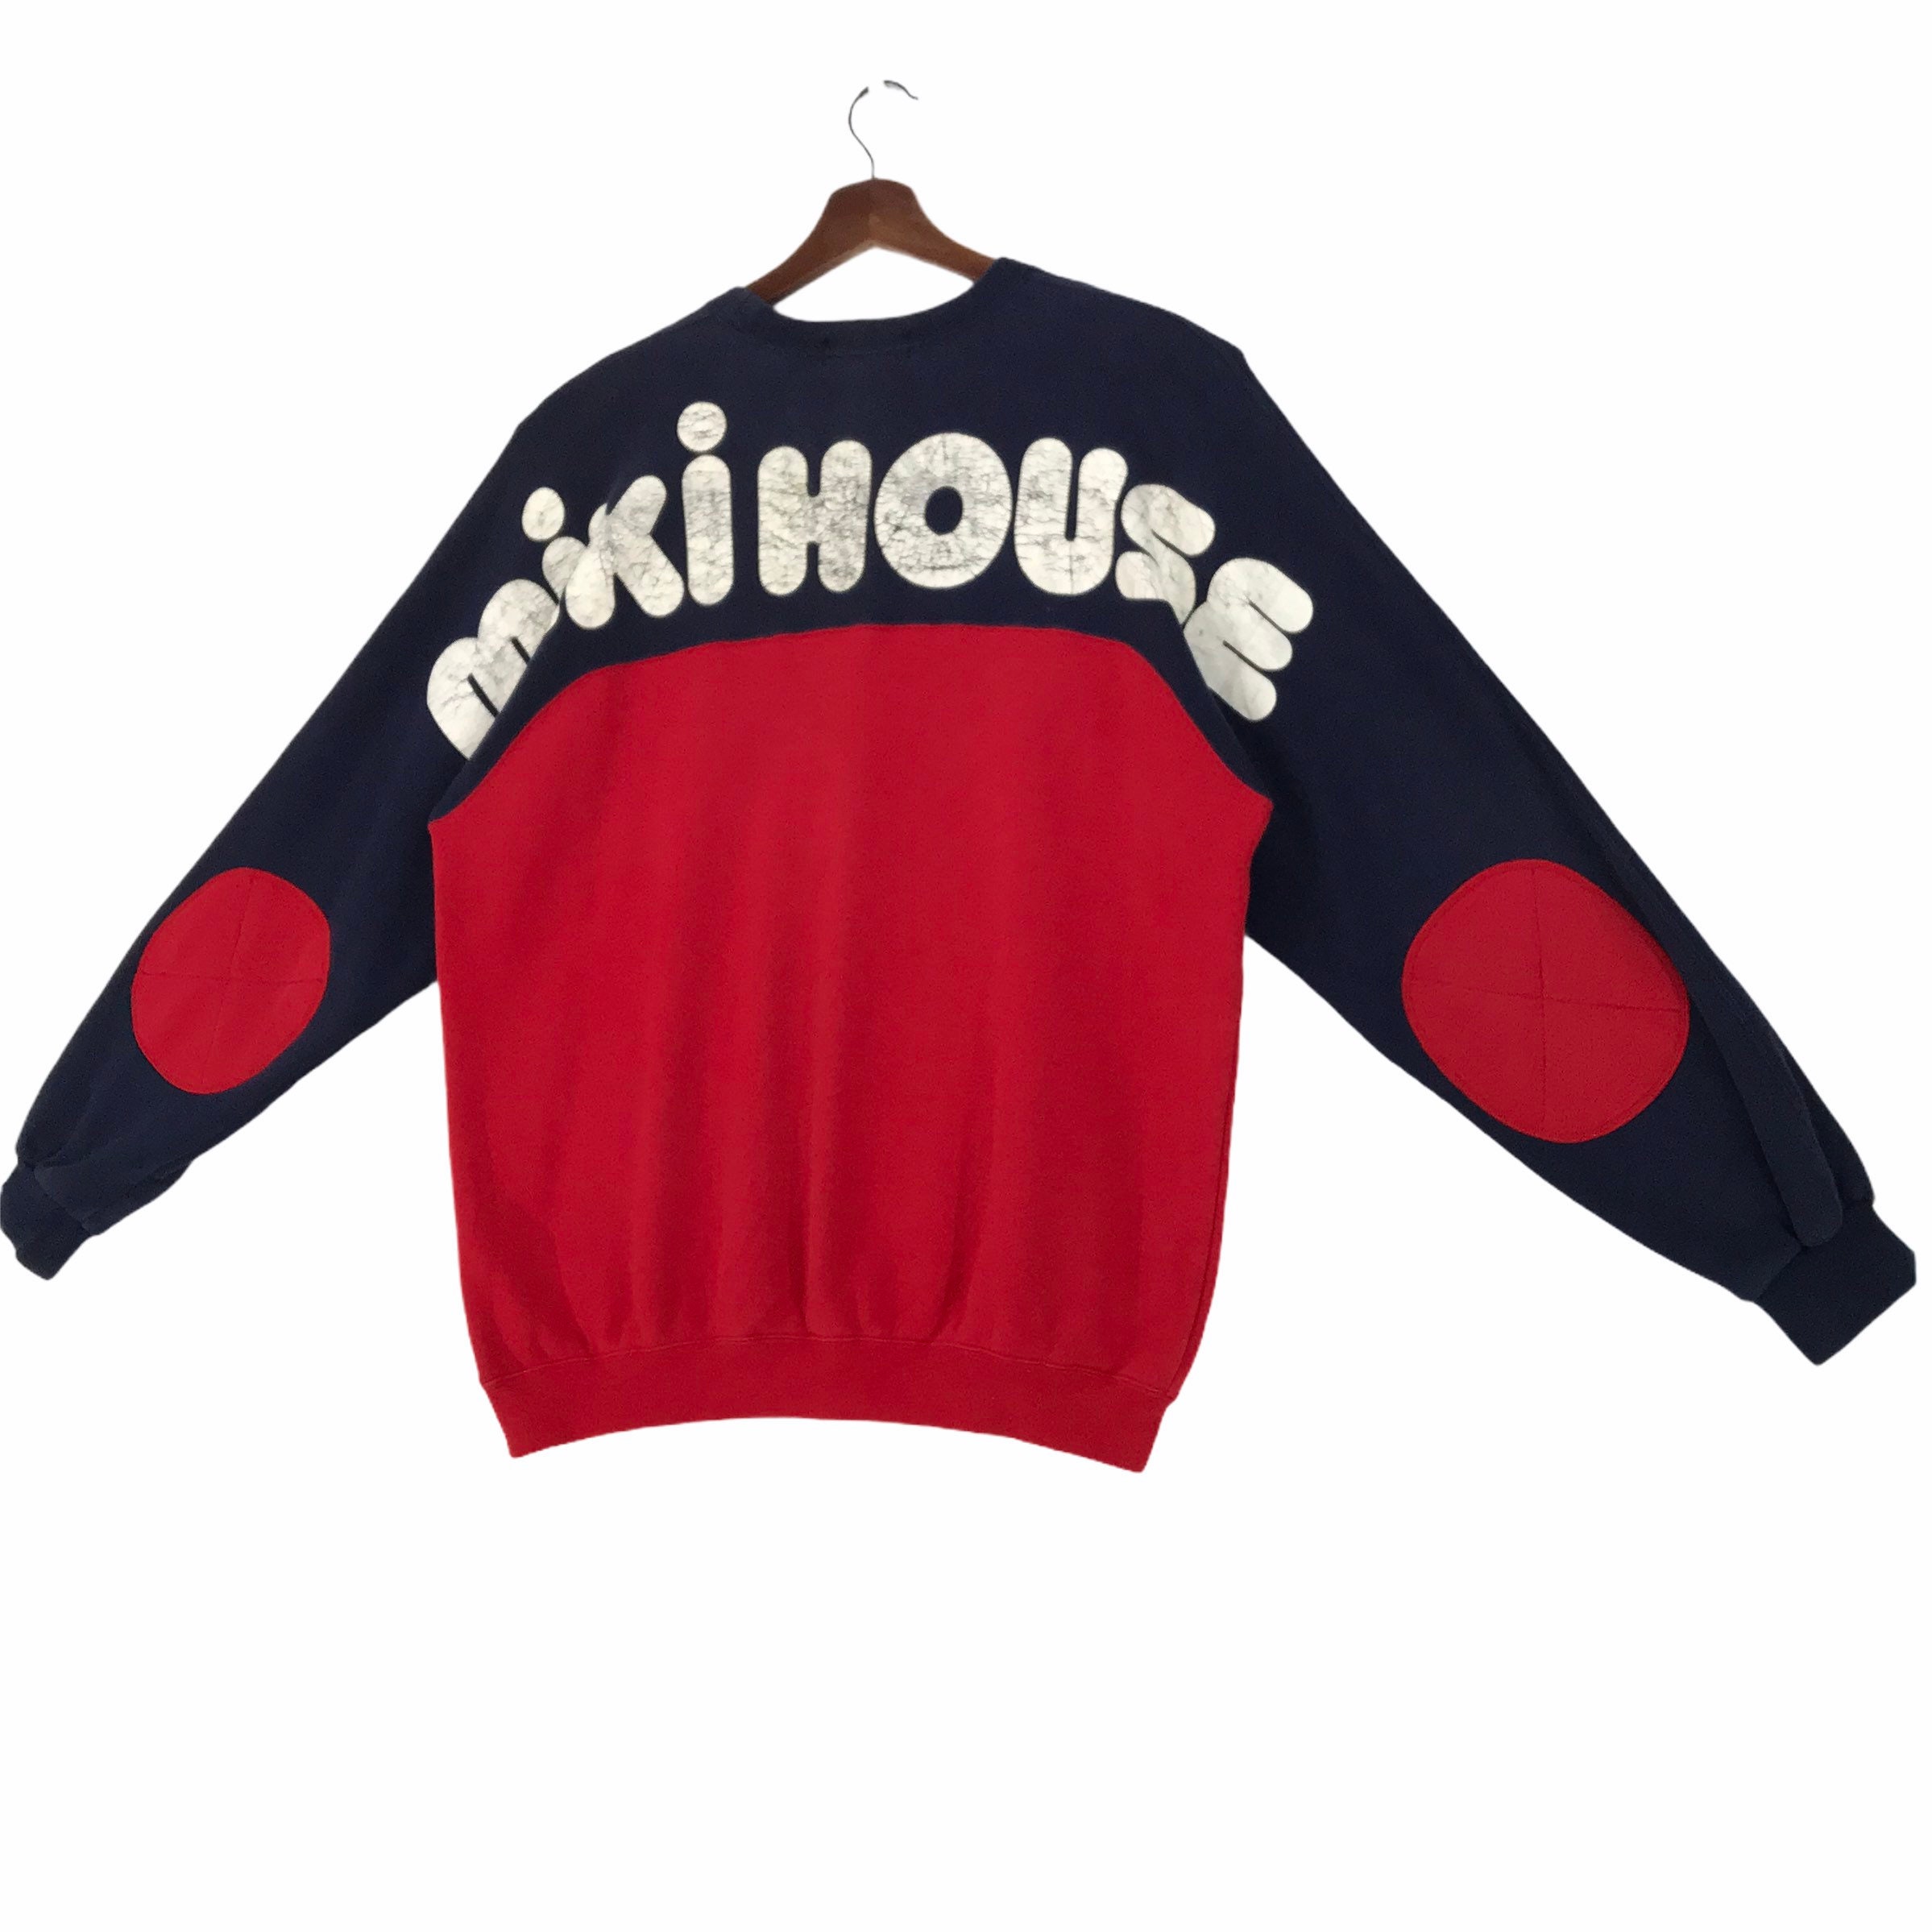 Vintage Miki House Sweatshirt Big Spellout Miki House Back - Etsy